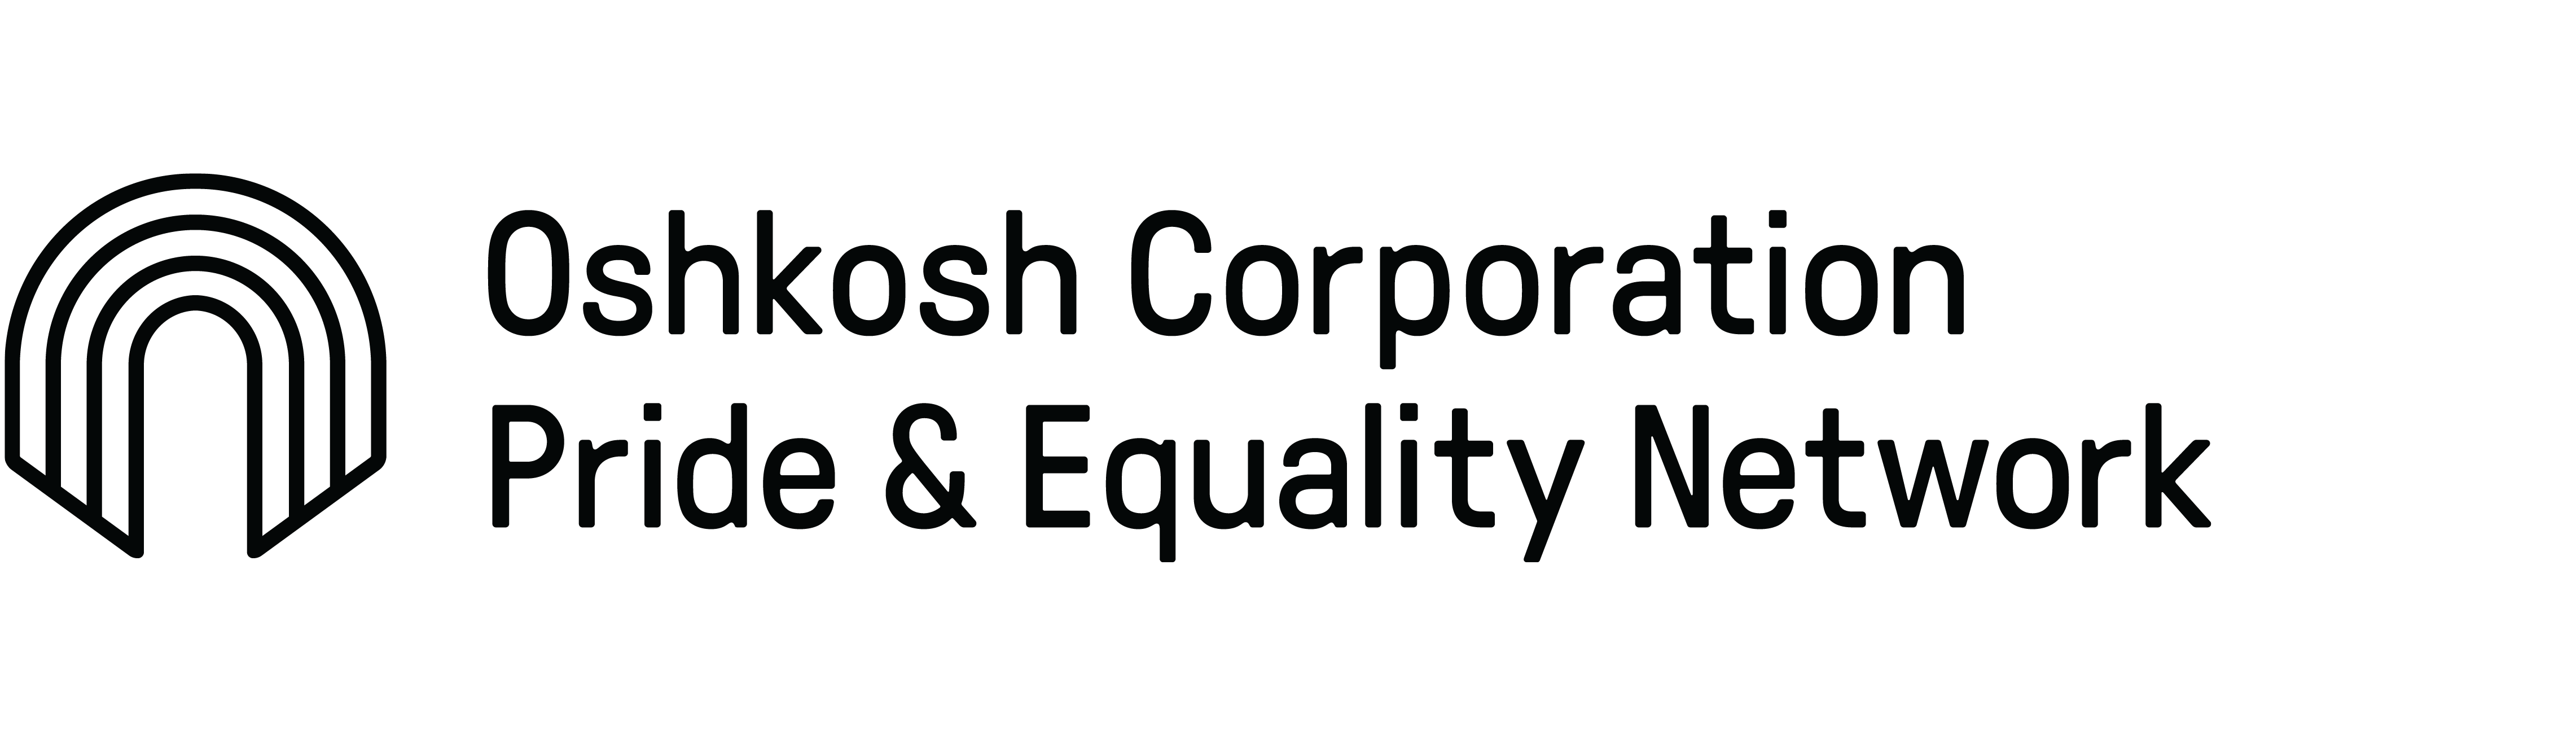 Black Oshkosh Corporation Pride & Equality Network logo